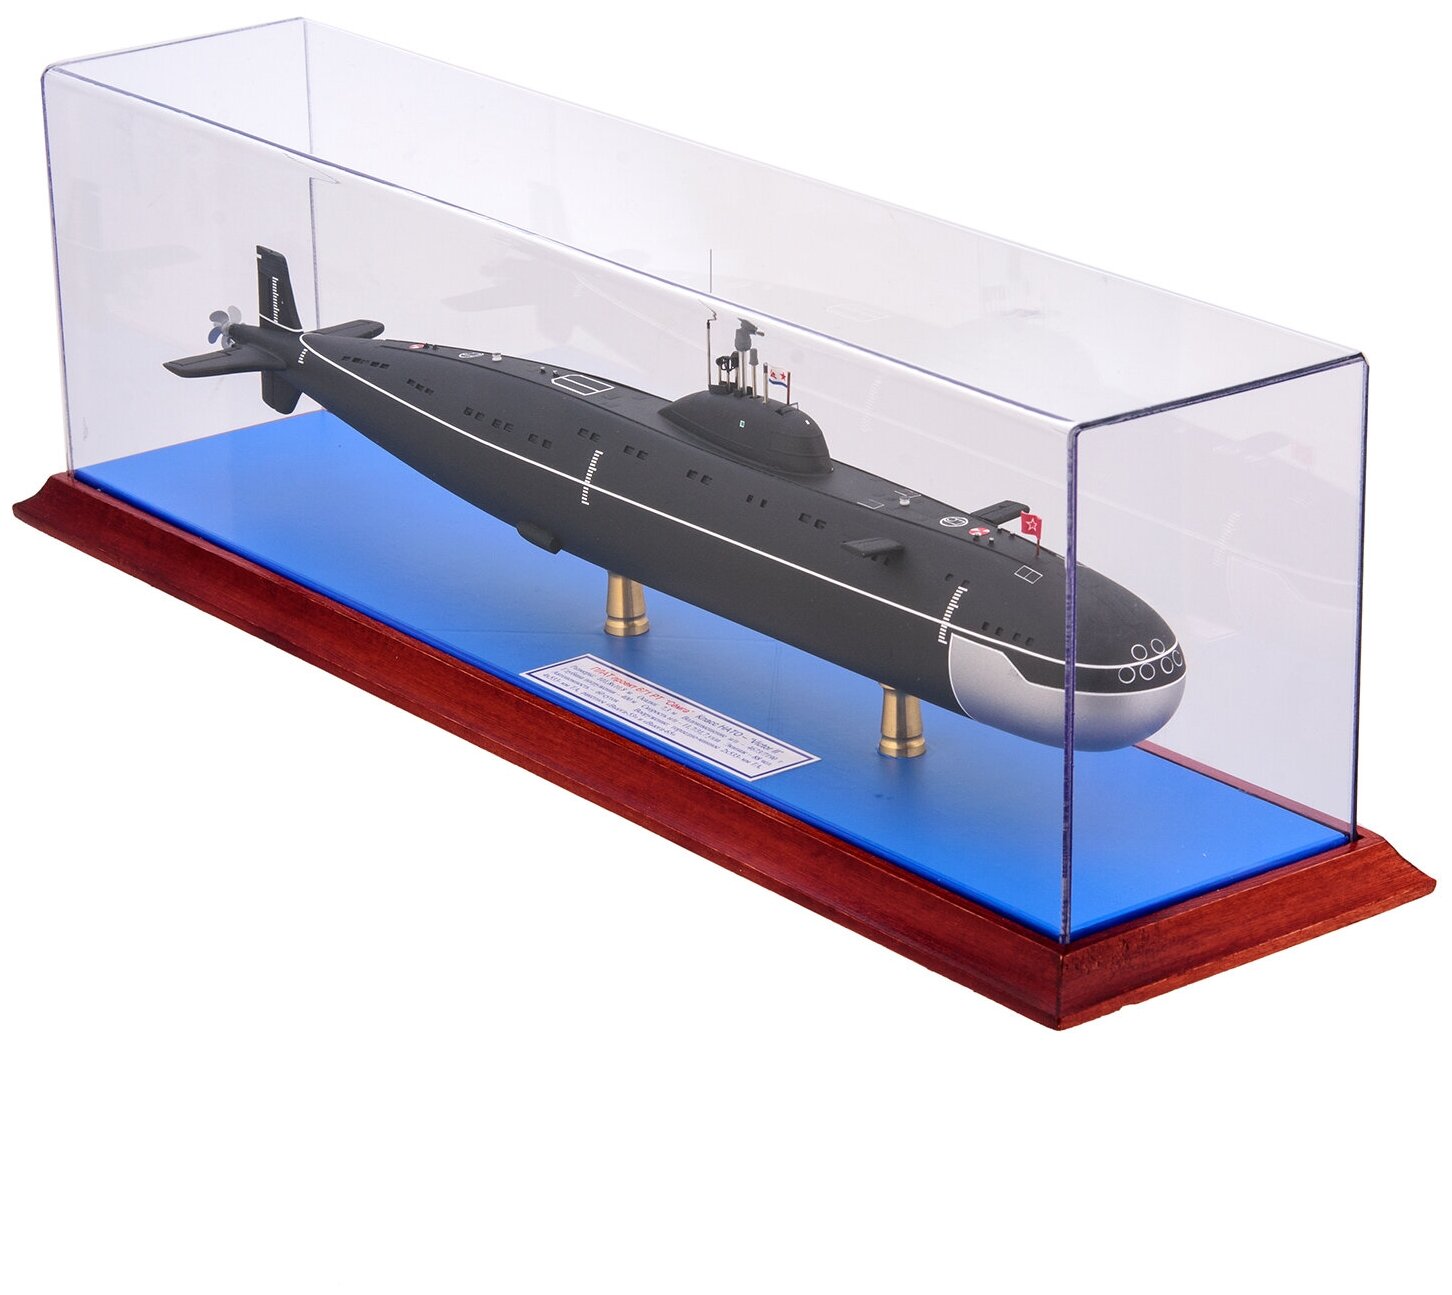 Макет подводной лодки "Семга" проекта 671 РТ (1:250)